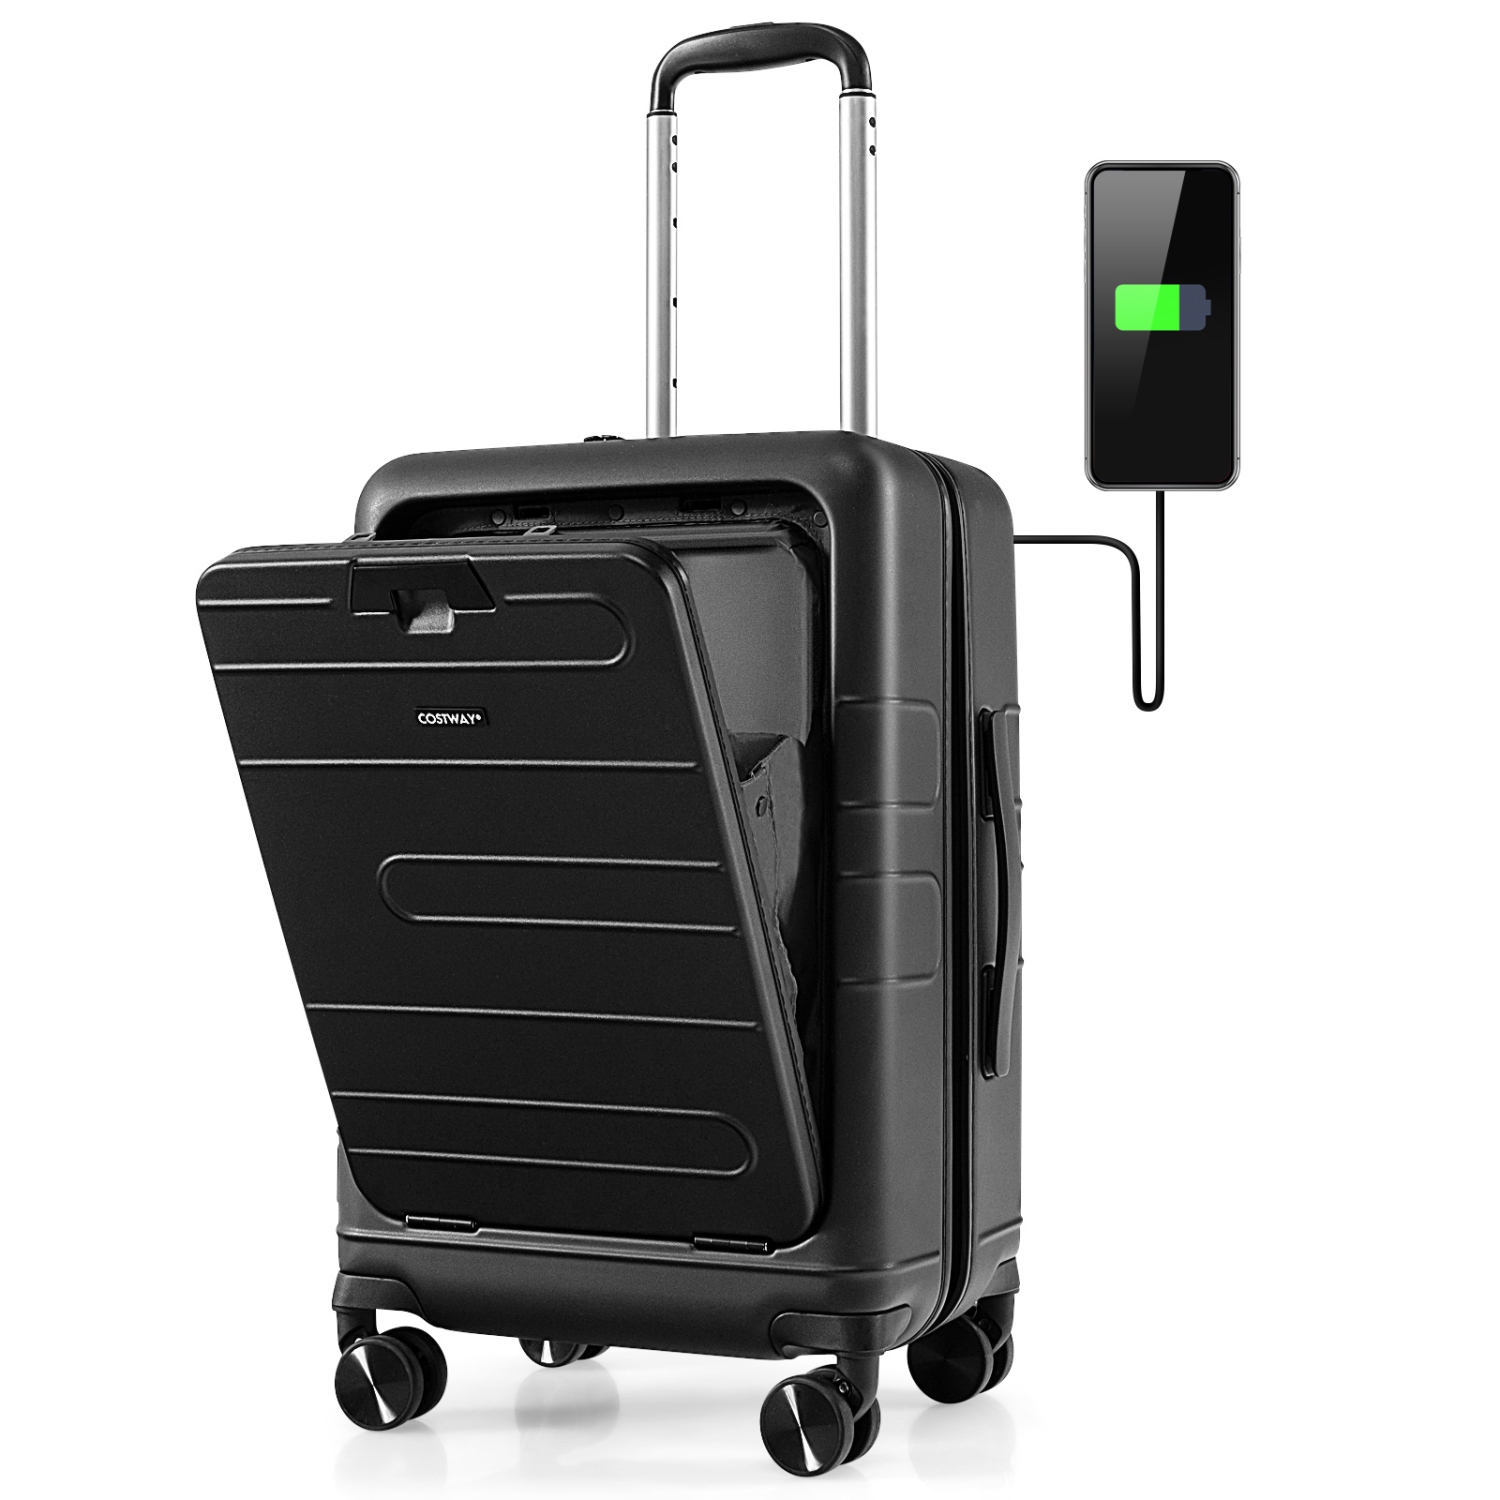 Costway 20" Carry-on Luggage PC Hardside Suitcase TSA Lock w/ Front Pocket & USB Port